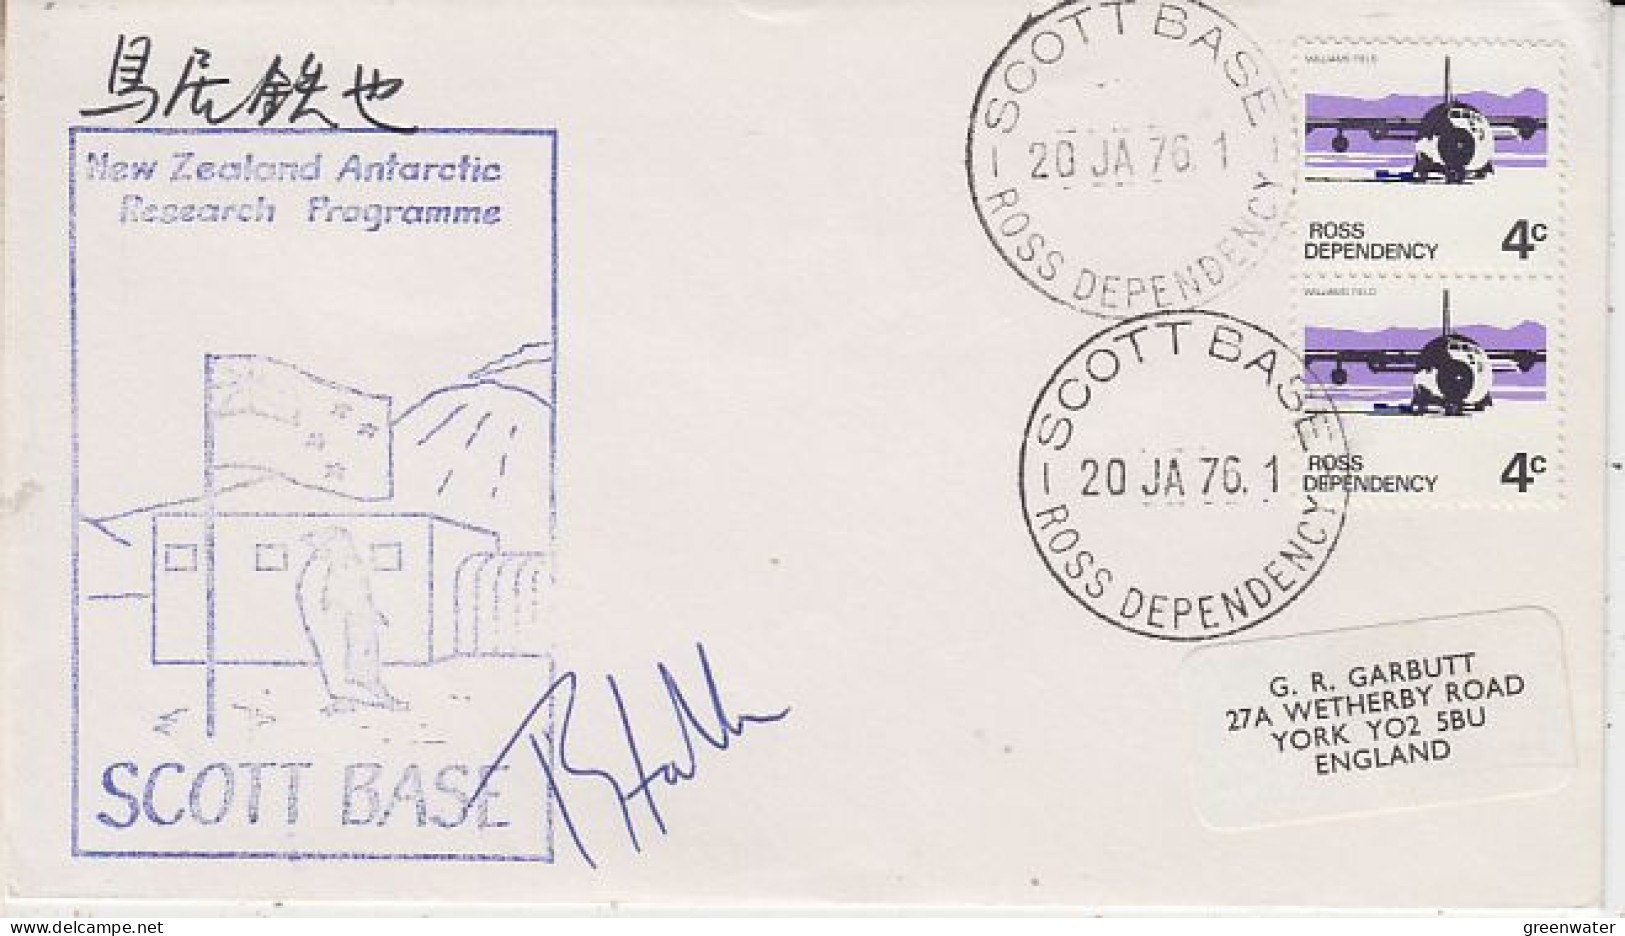 Ross Dependency NZARP Scott Base Signature Japanese Scientist + Signature Ca Scott Base 20 JA 1976  (RO199) - Covers & Documents